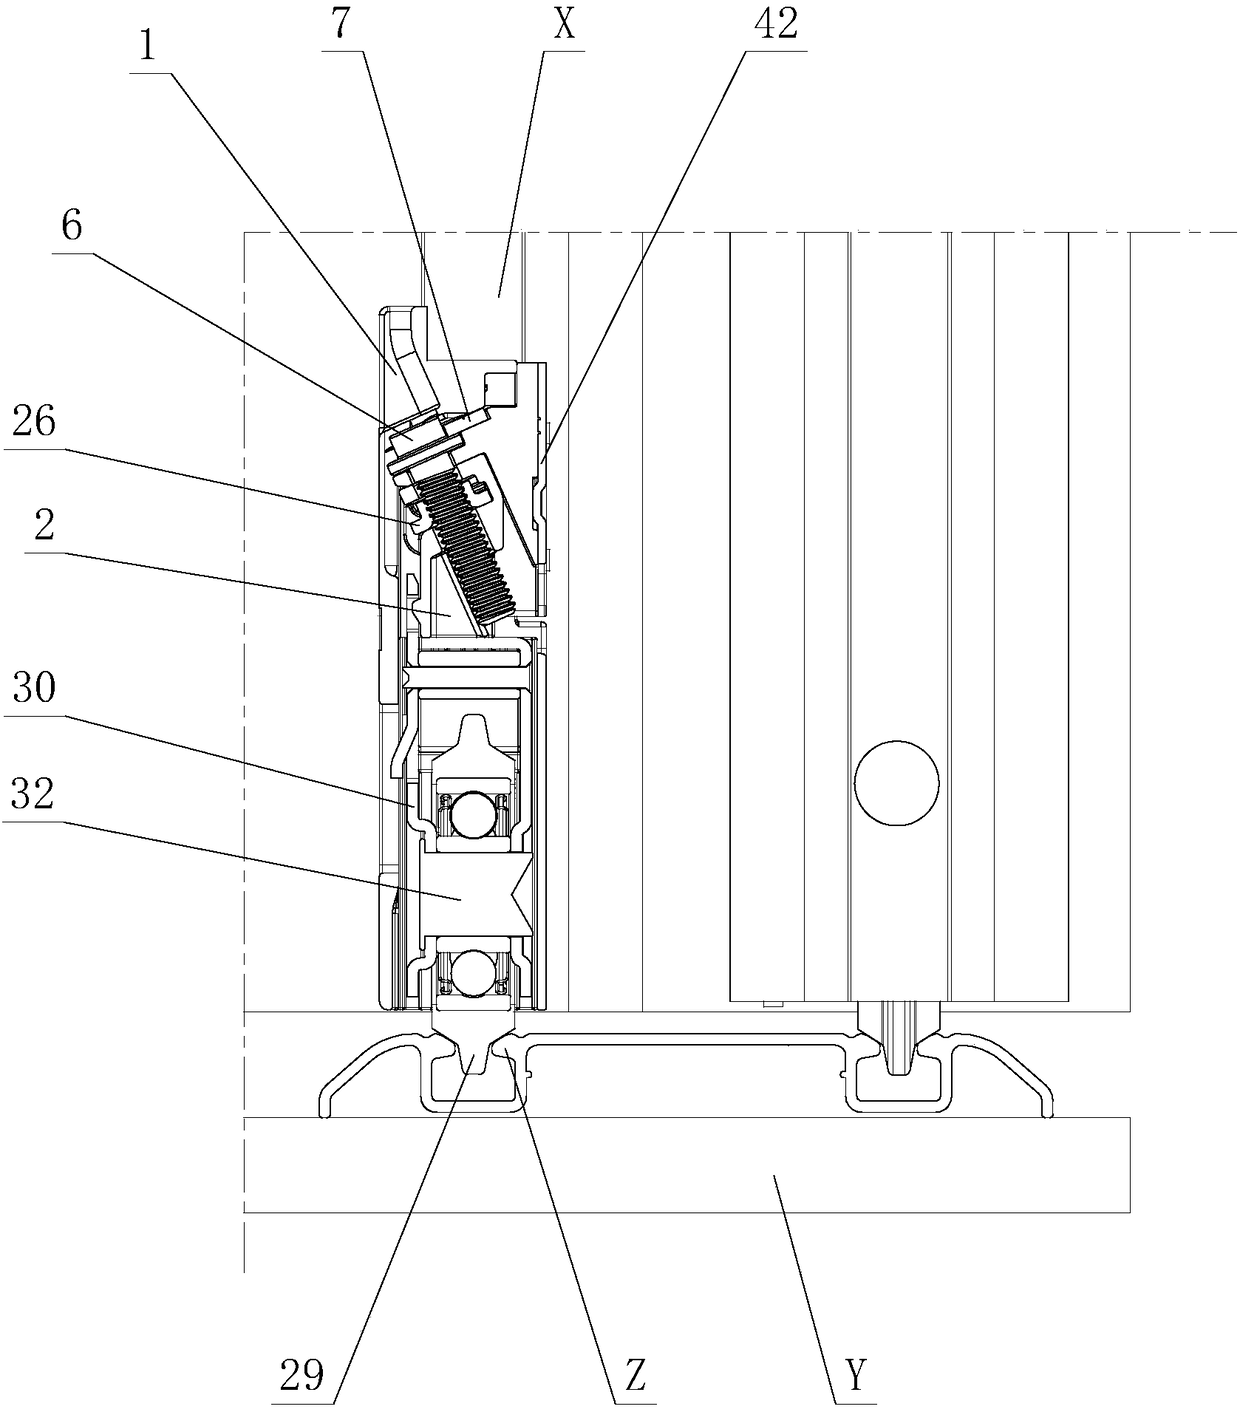 Rotating wheel integrated optimization adjustment structure used for furniture sliding door